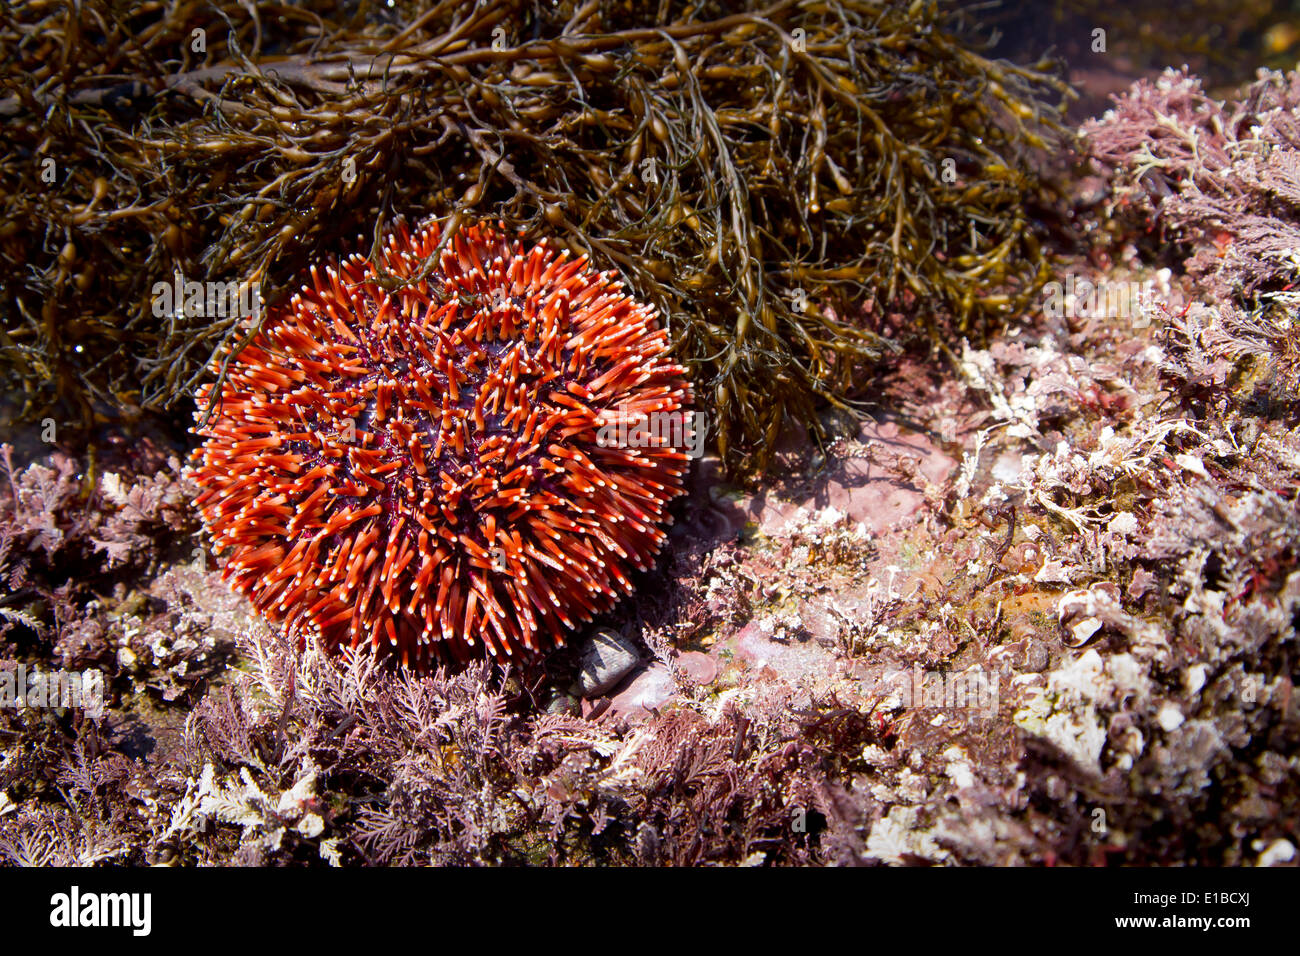 European edible sea urchin or common sea urchin (Echinus esculentus) in a tidal pool Stock Photo